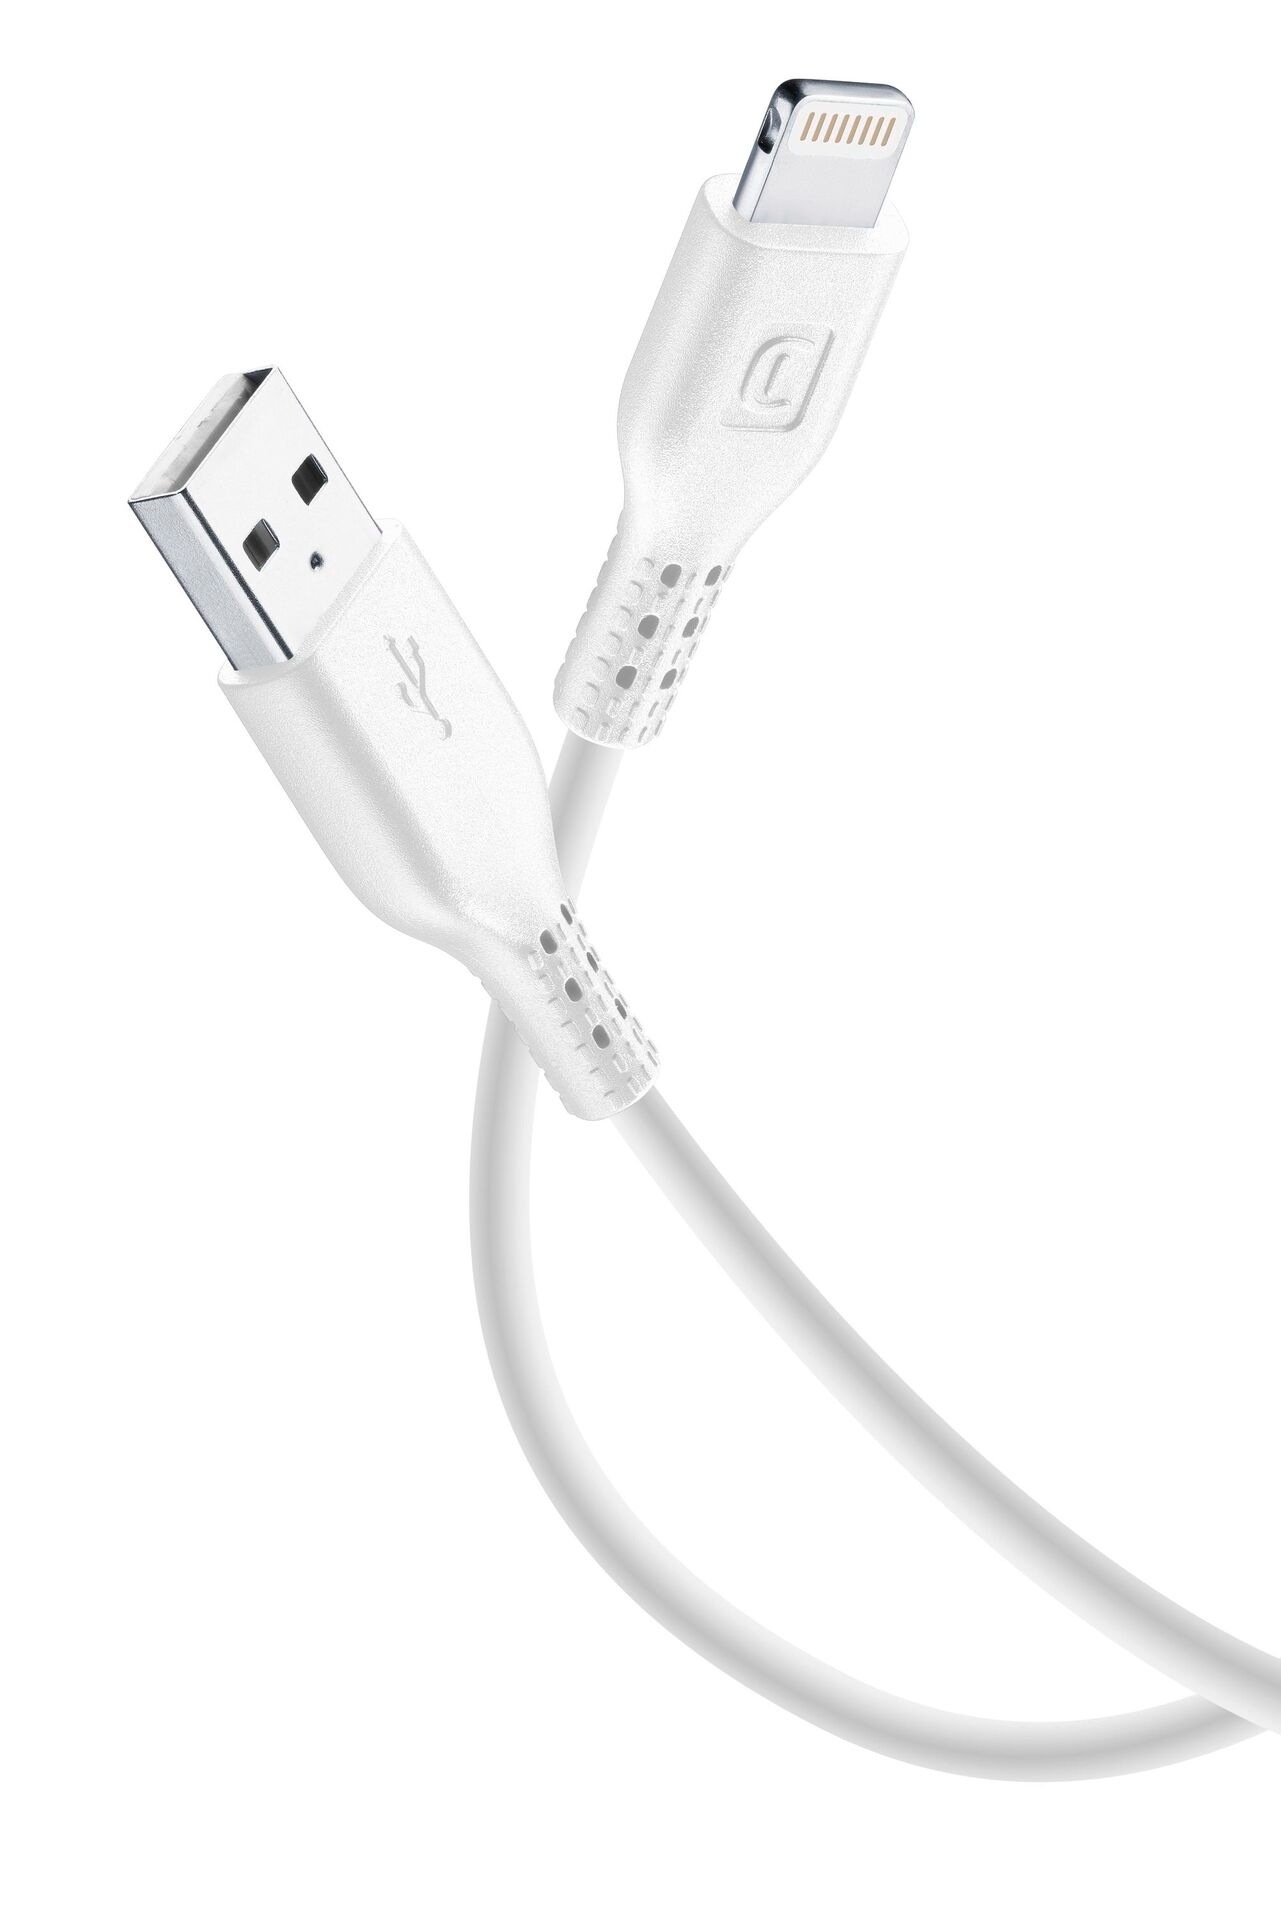 Cellularline Lightningkabel Cable Lightning«, / m 60 Shop im cm A, Data OTTO »Power Lightning-USB 0,6 Online USB-A jetzt Typ